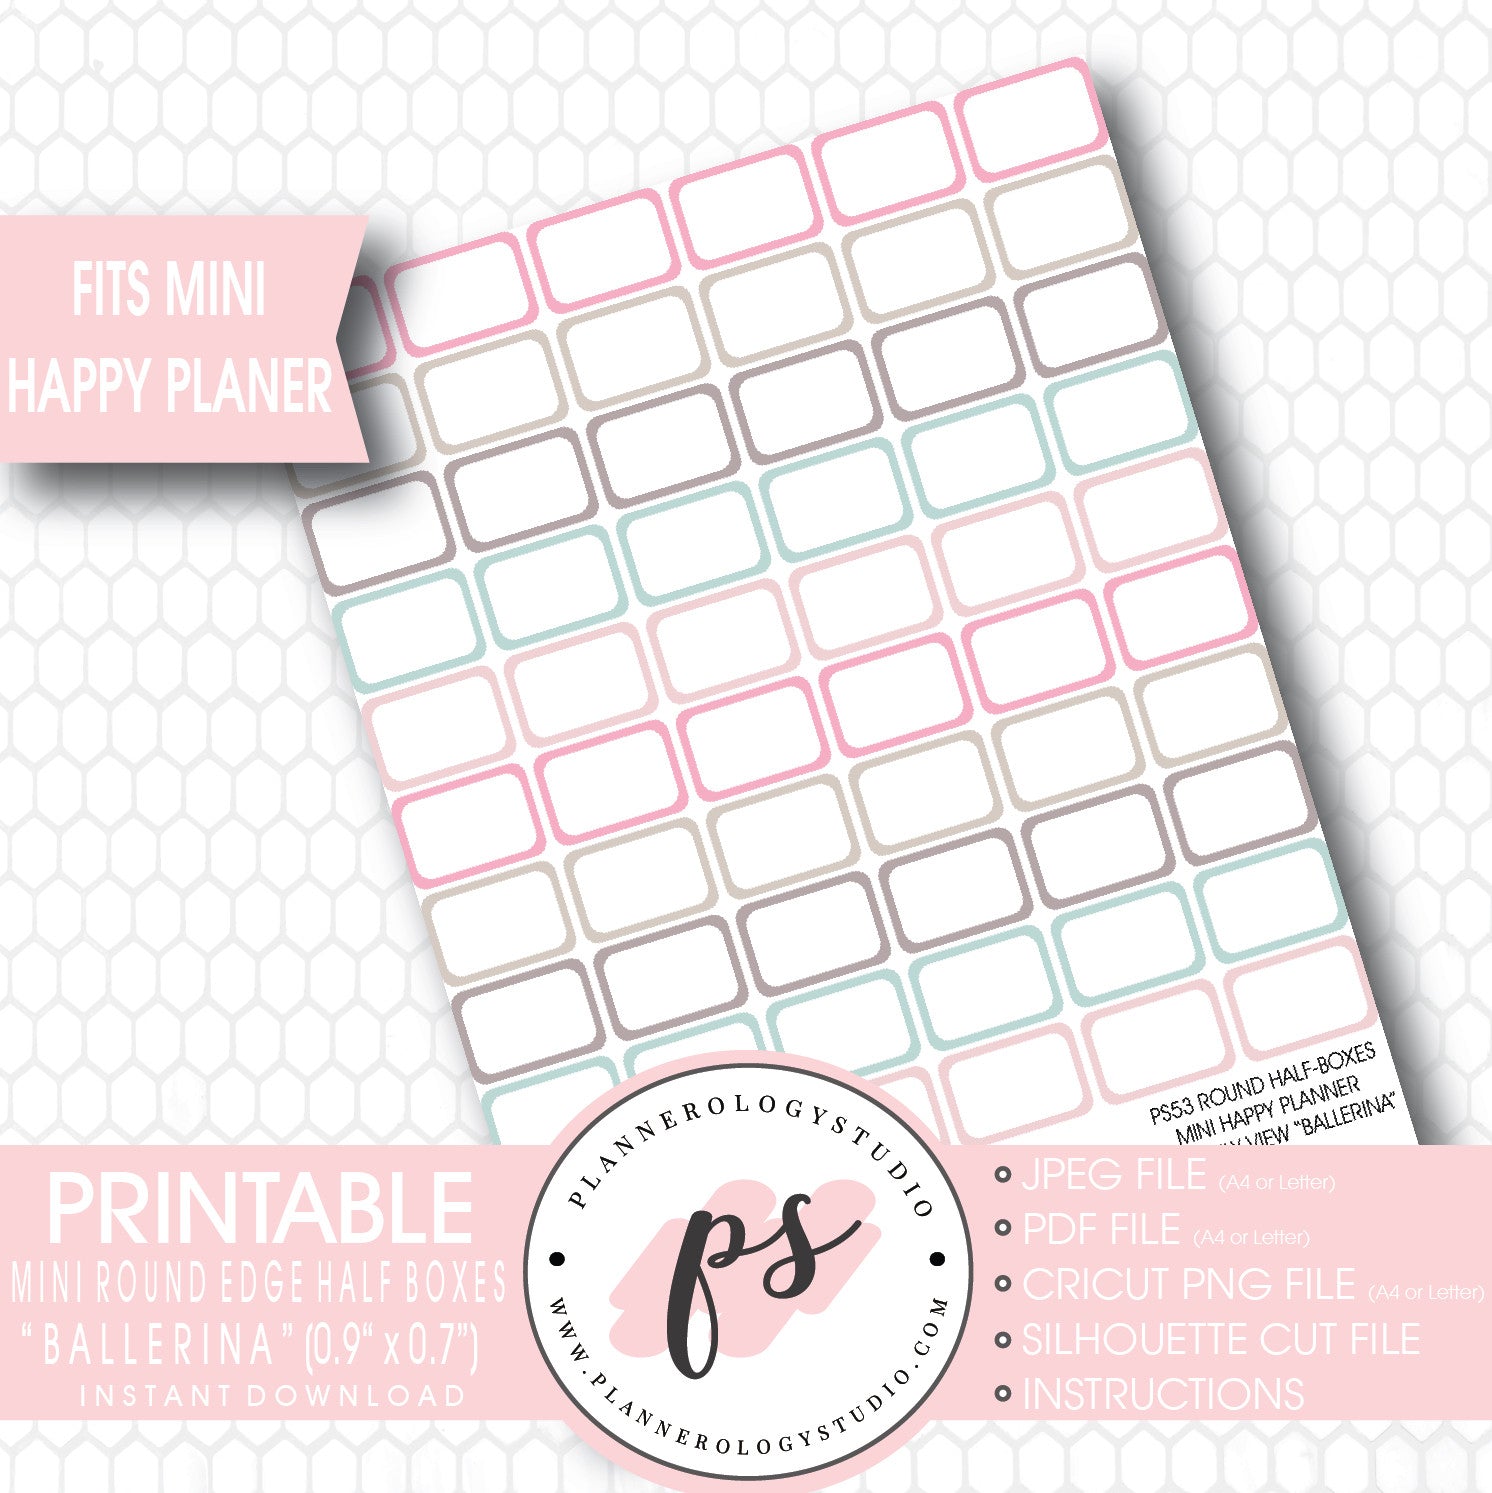 "Ballerina" Mini Round Edge Half Boxes Printable Planner Stickers (for Mini Happy Planner Monthly View) - Plannerologystudio